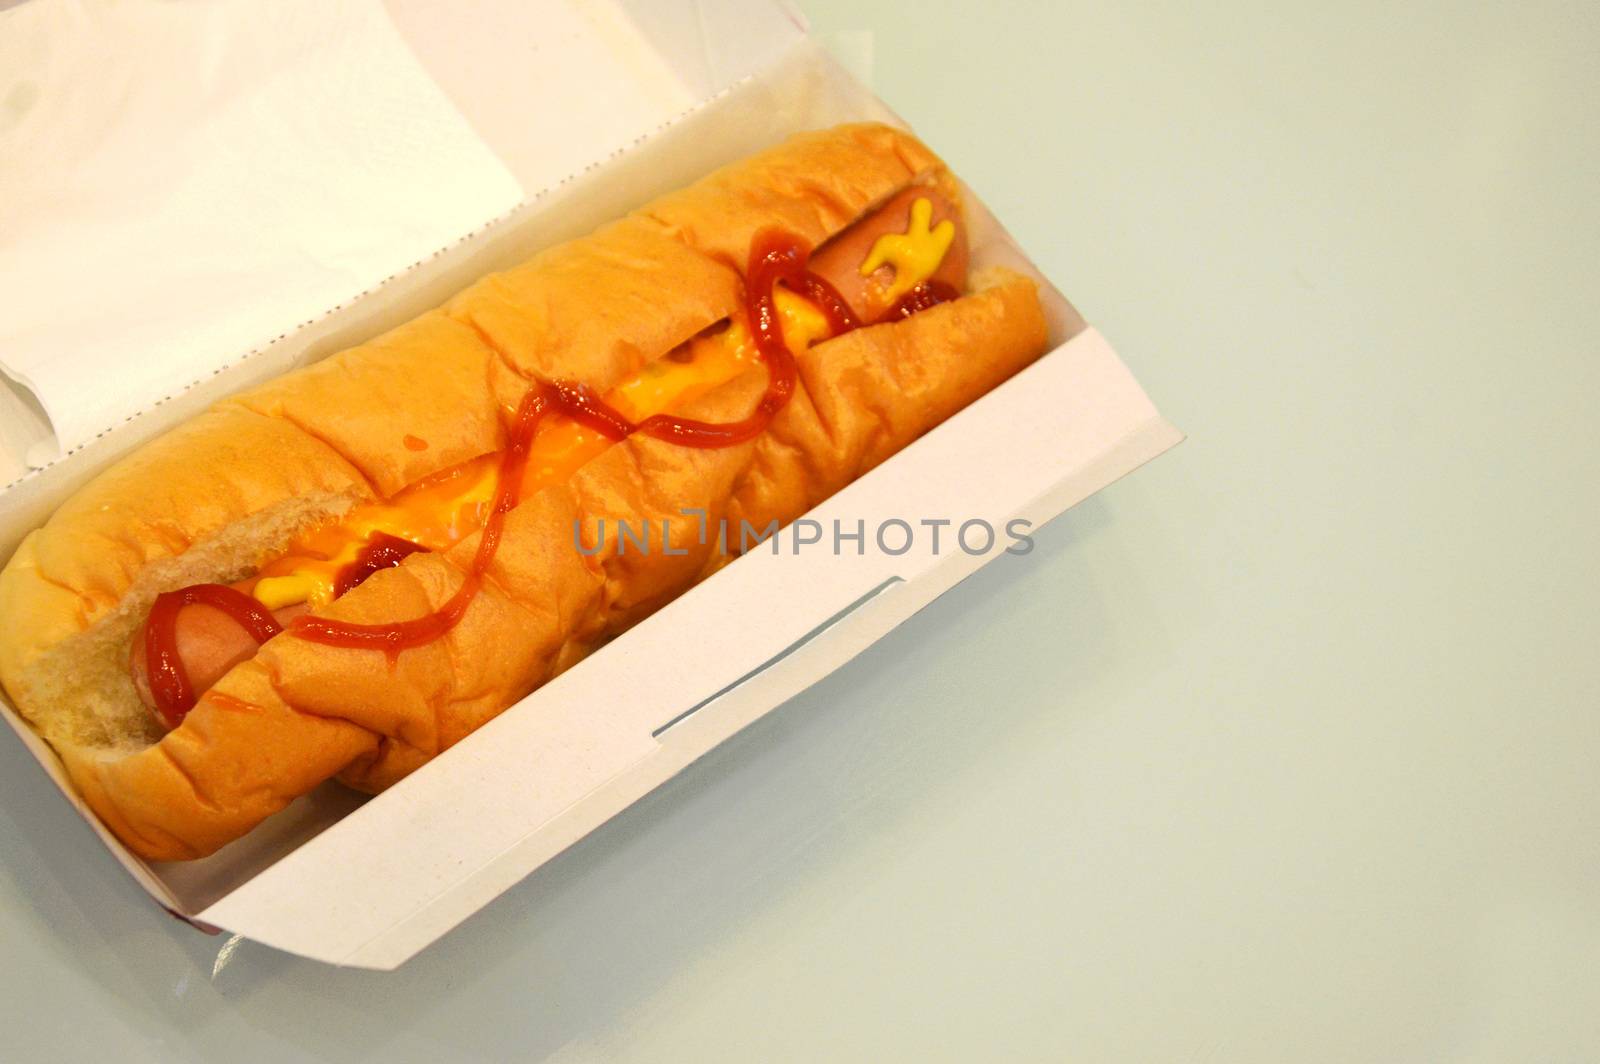 hot dog by antonihalim